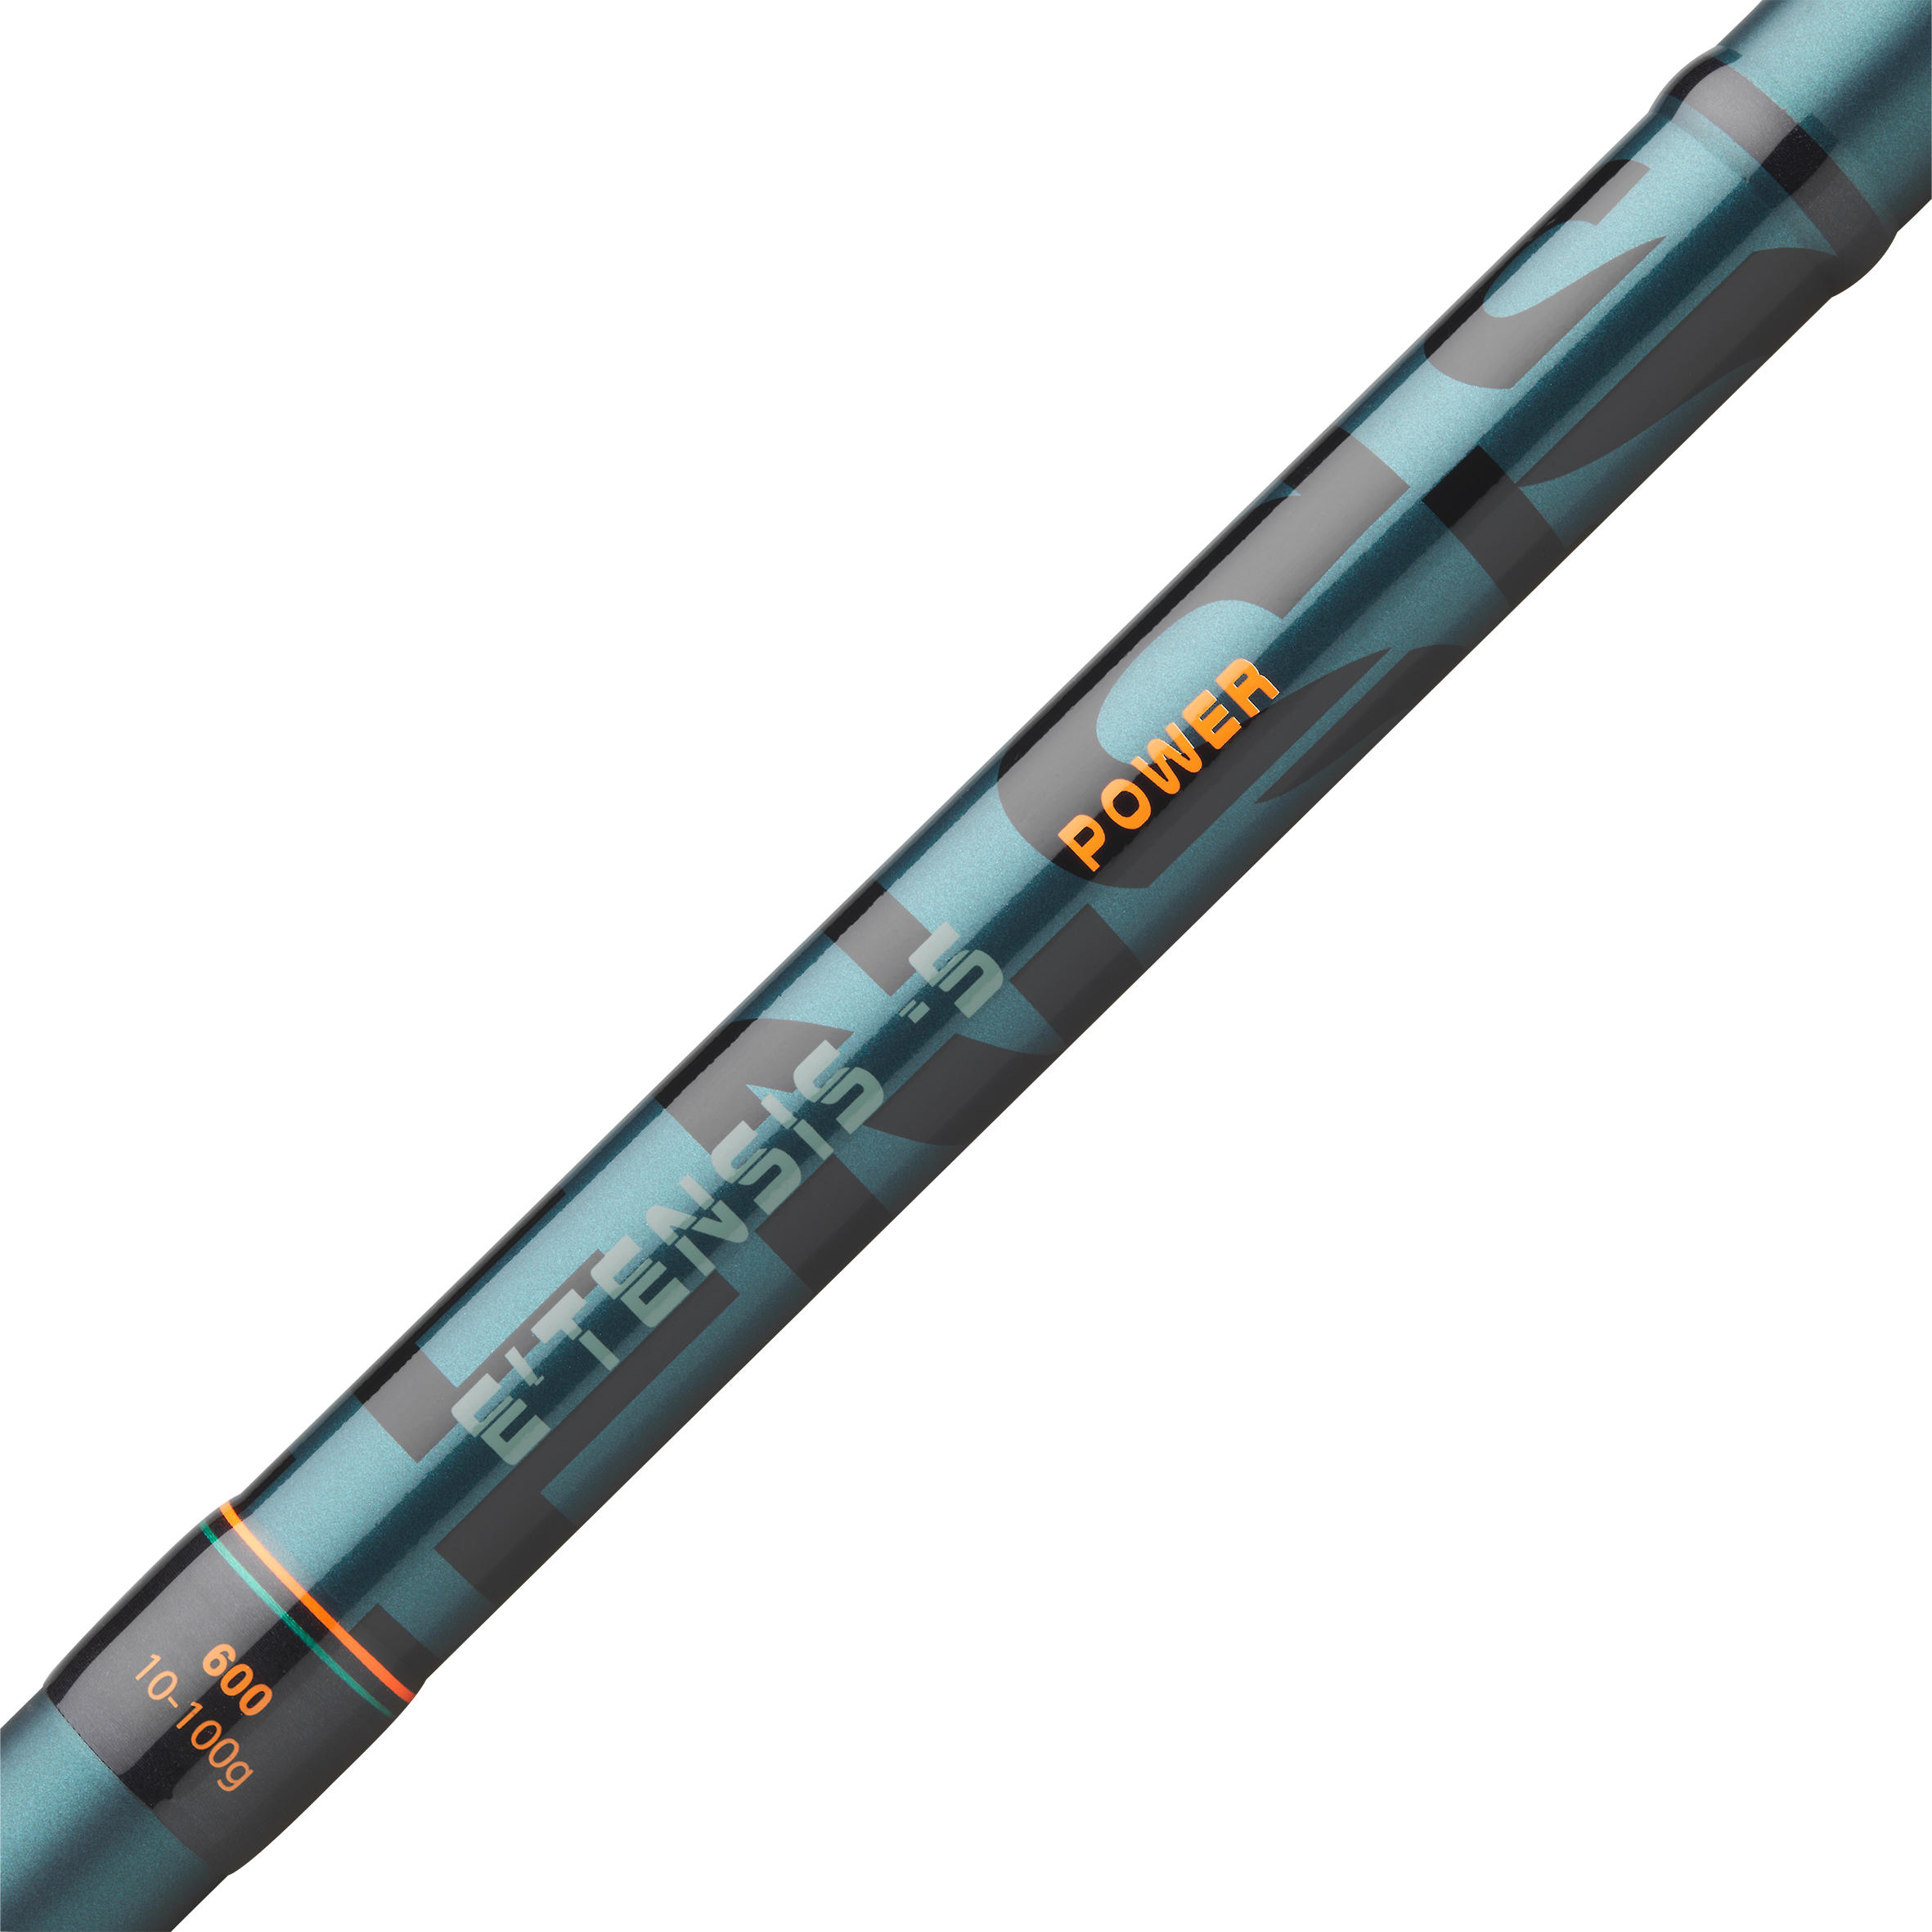 E'TENSIS-5 600 power sea fishing rod 3/9